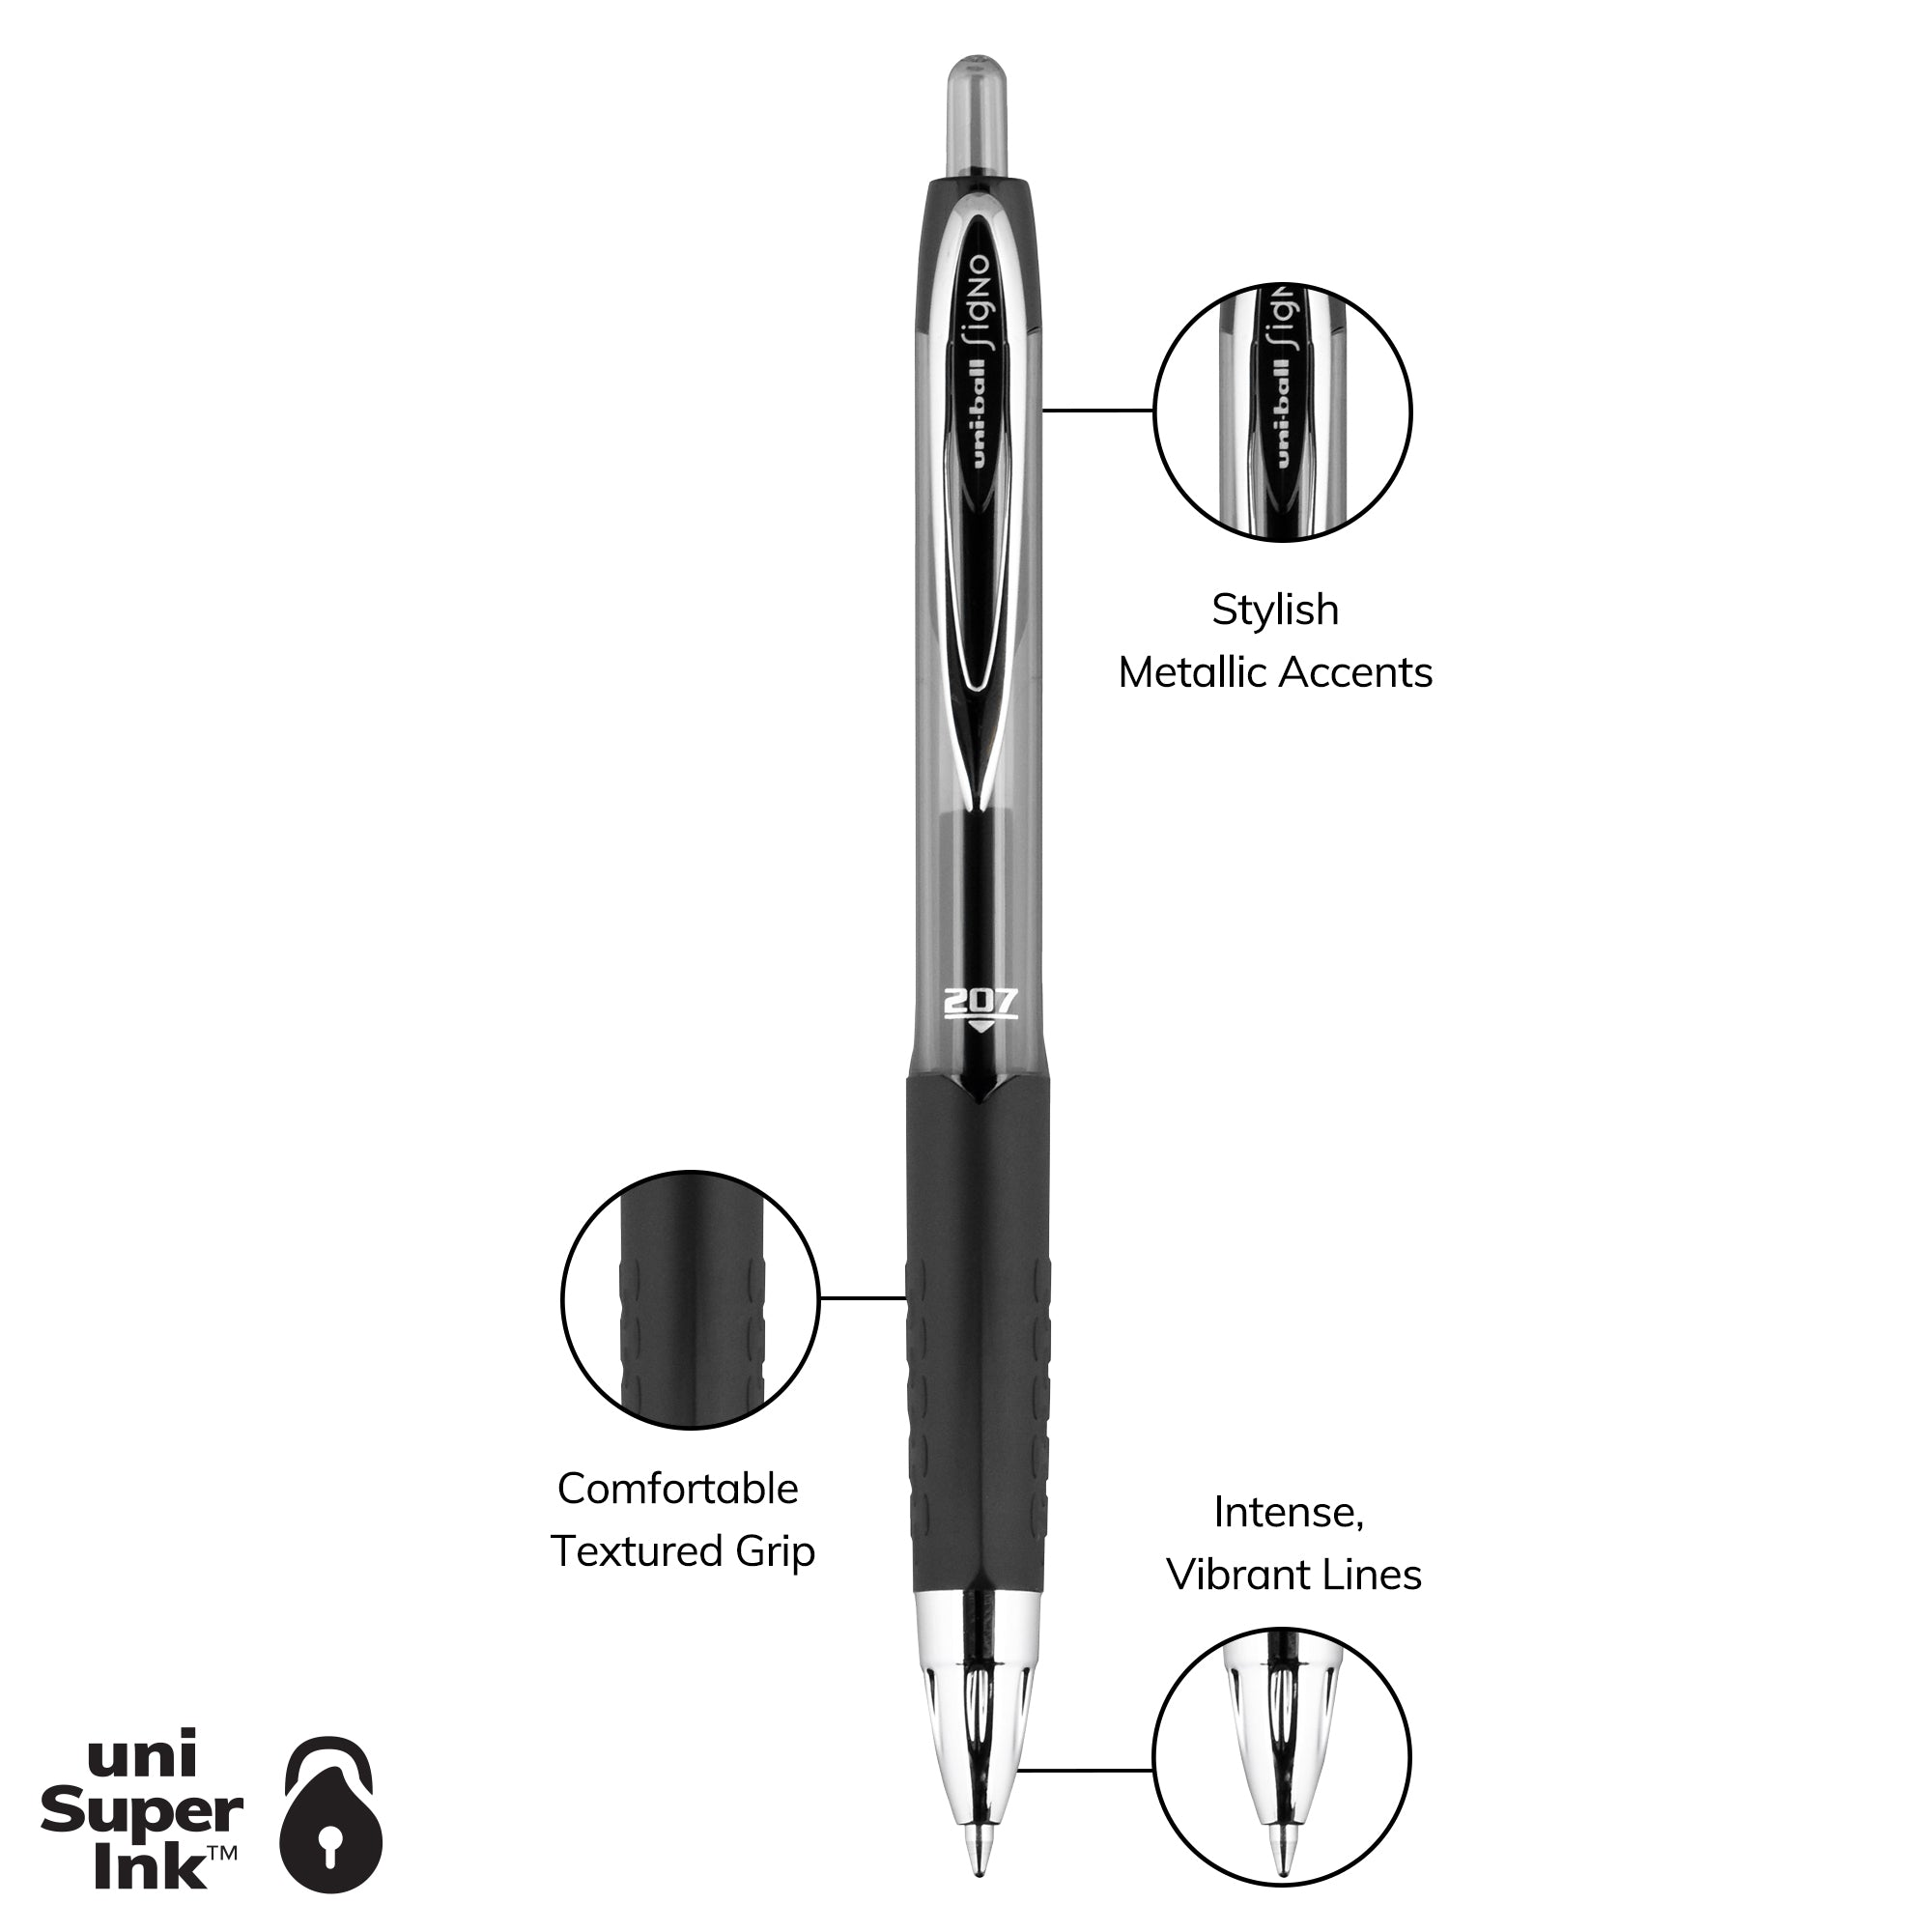 Sanford 1739929 Signo Gel 207 Roller Ball Retractable Gel Pen Assorted